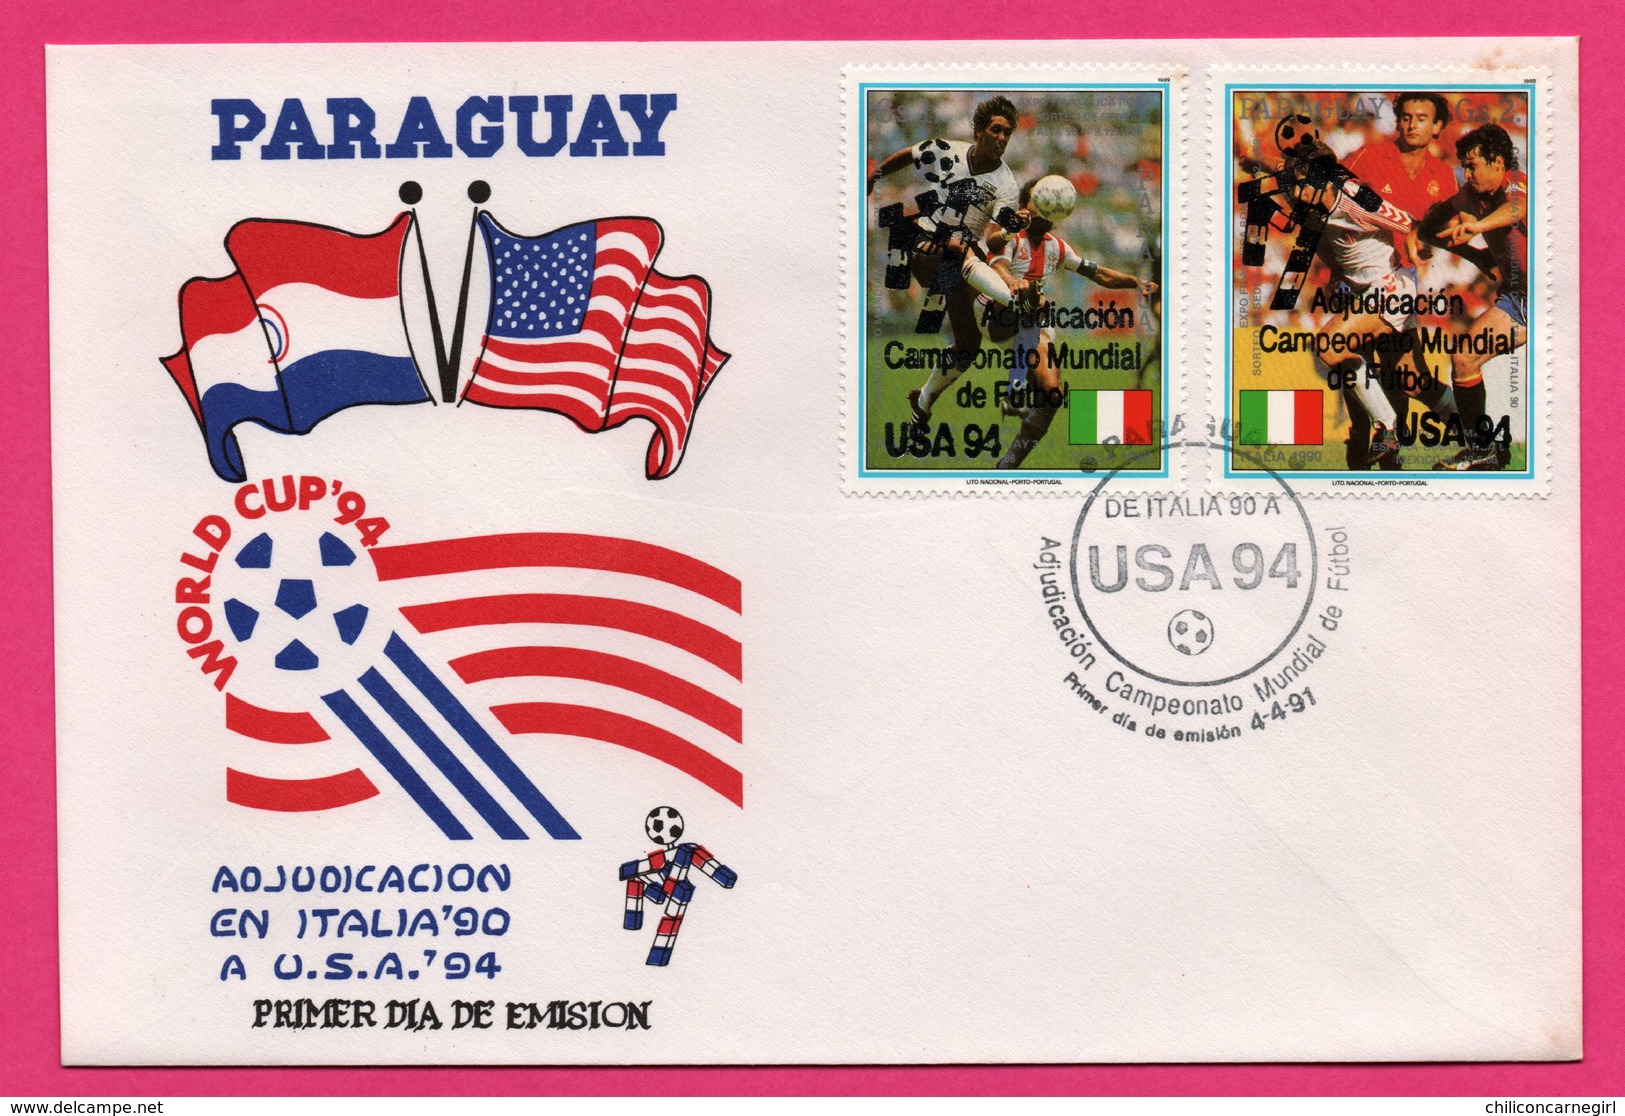 FDC - Football - World Cup USA 94 - Paraguay - De Italia 90 A - Adjudicacion Campeonato Mundial De Futbol - 1994 - 1994 – USA